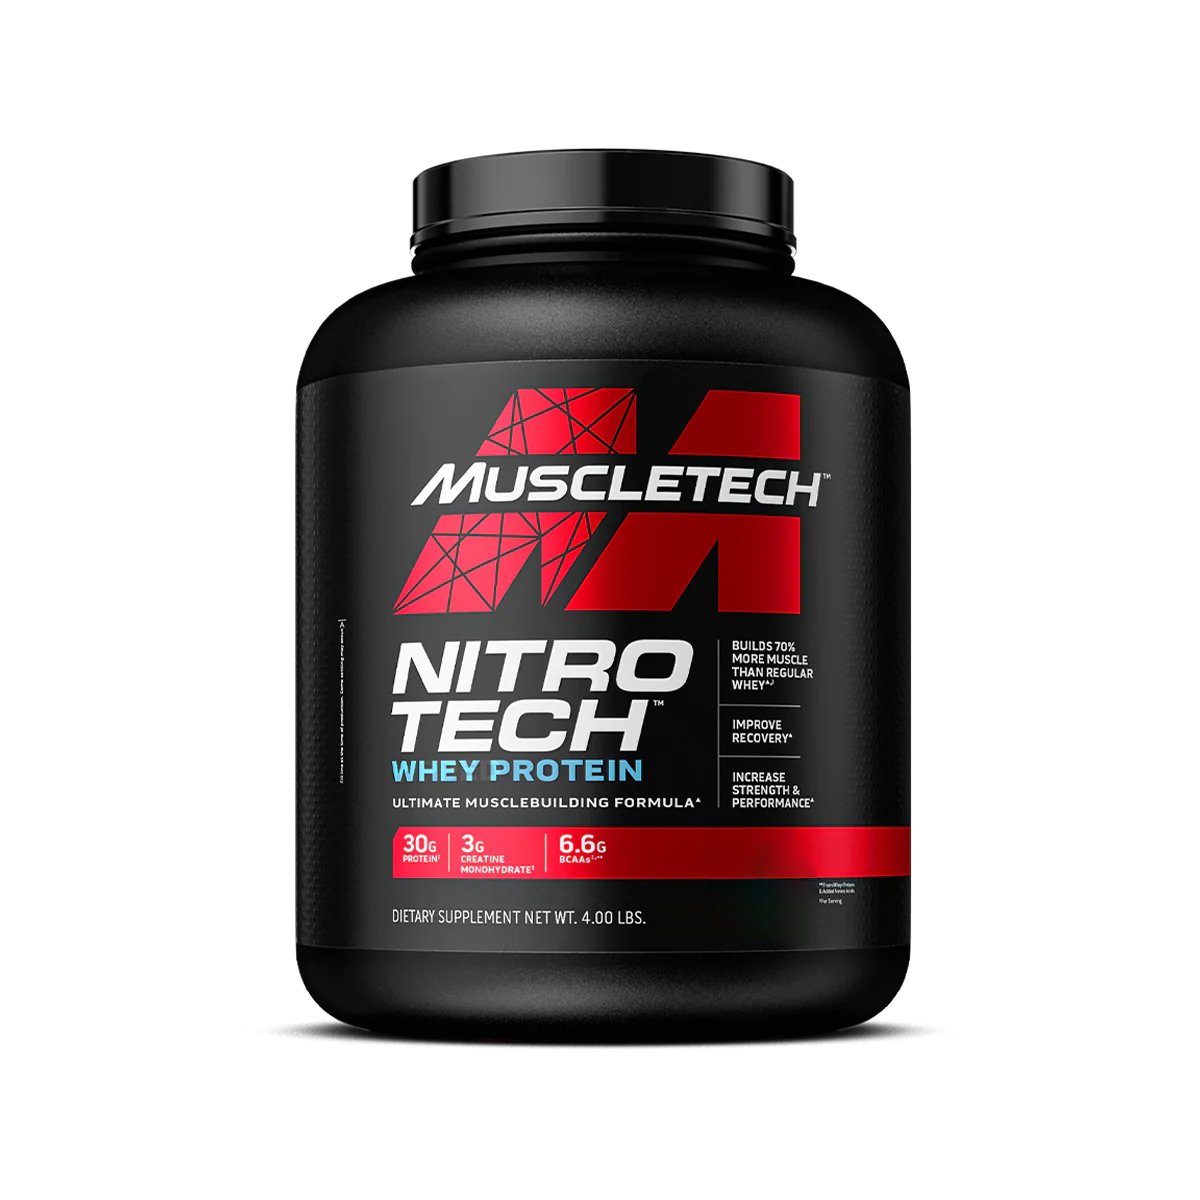 Протеин Muscletech Nitro Tech Whey Protein, 1.81 кг Шоколад,  ml, MuscleTech. Protein. Mass Gain recovery Anti-catabolic properties 